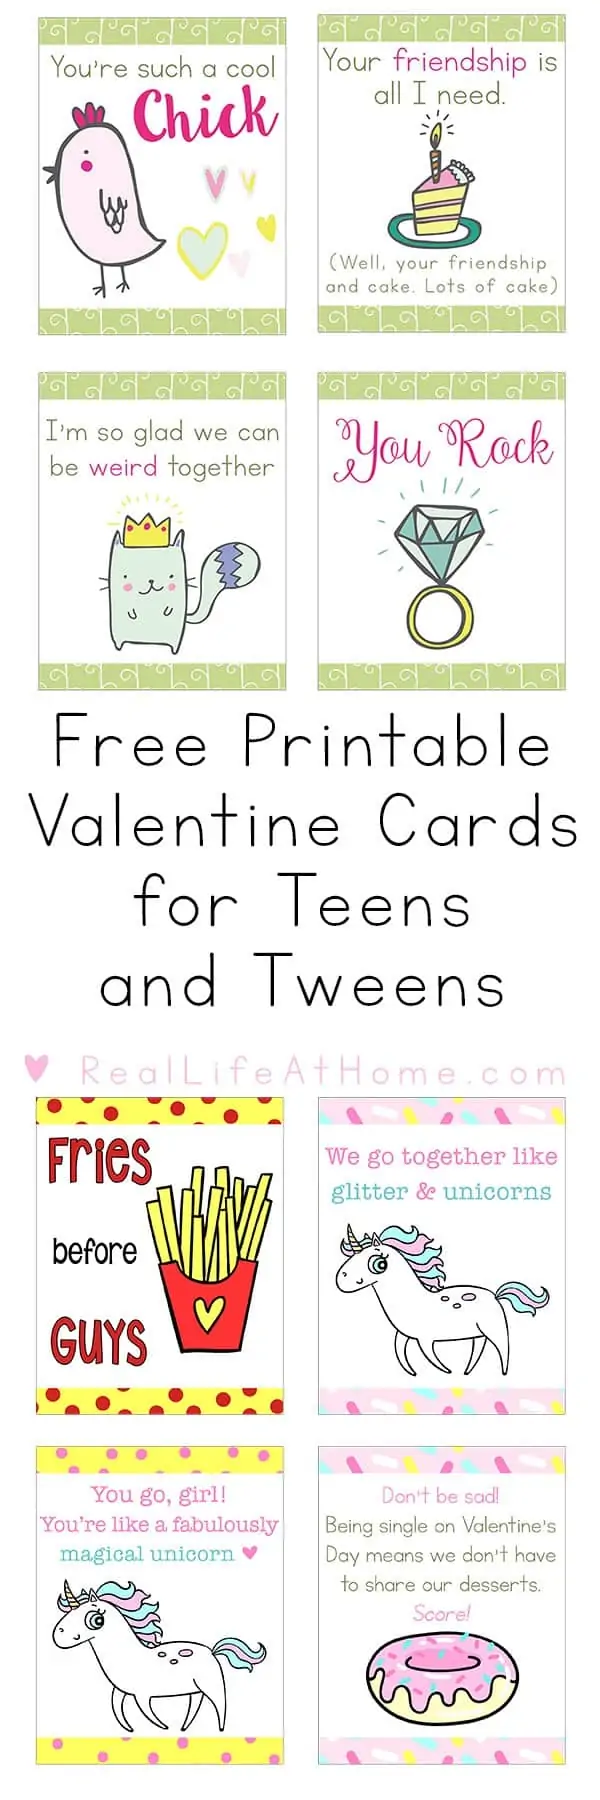 free printable Valentine cards for teens and tweens